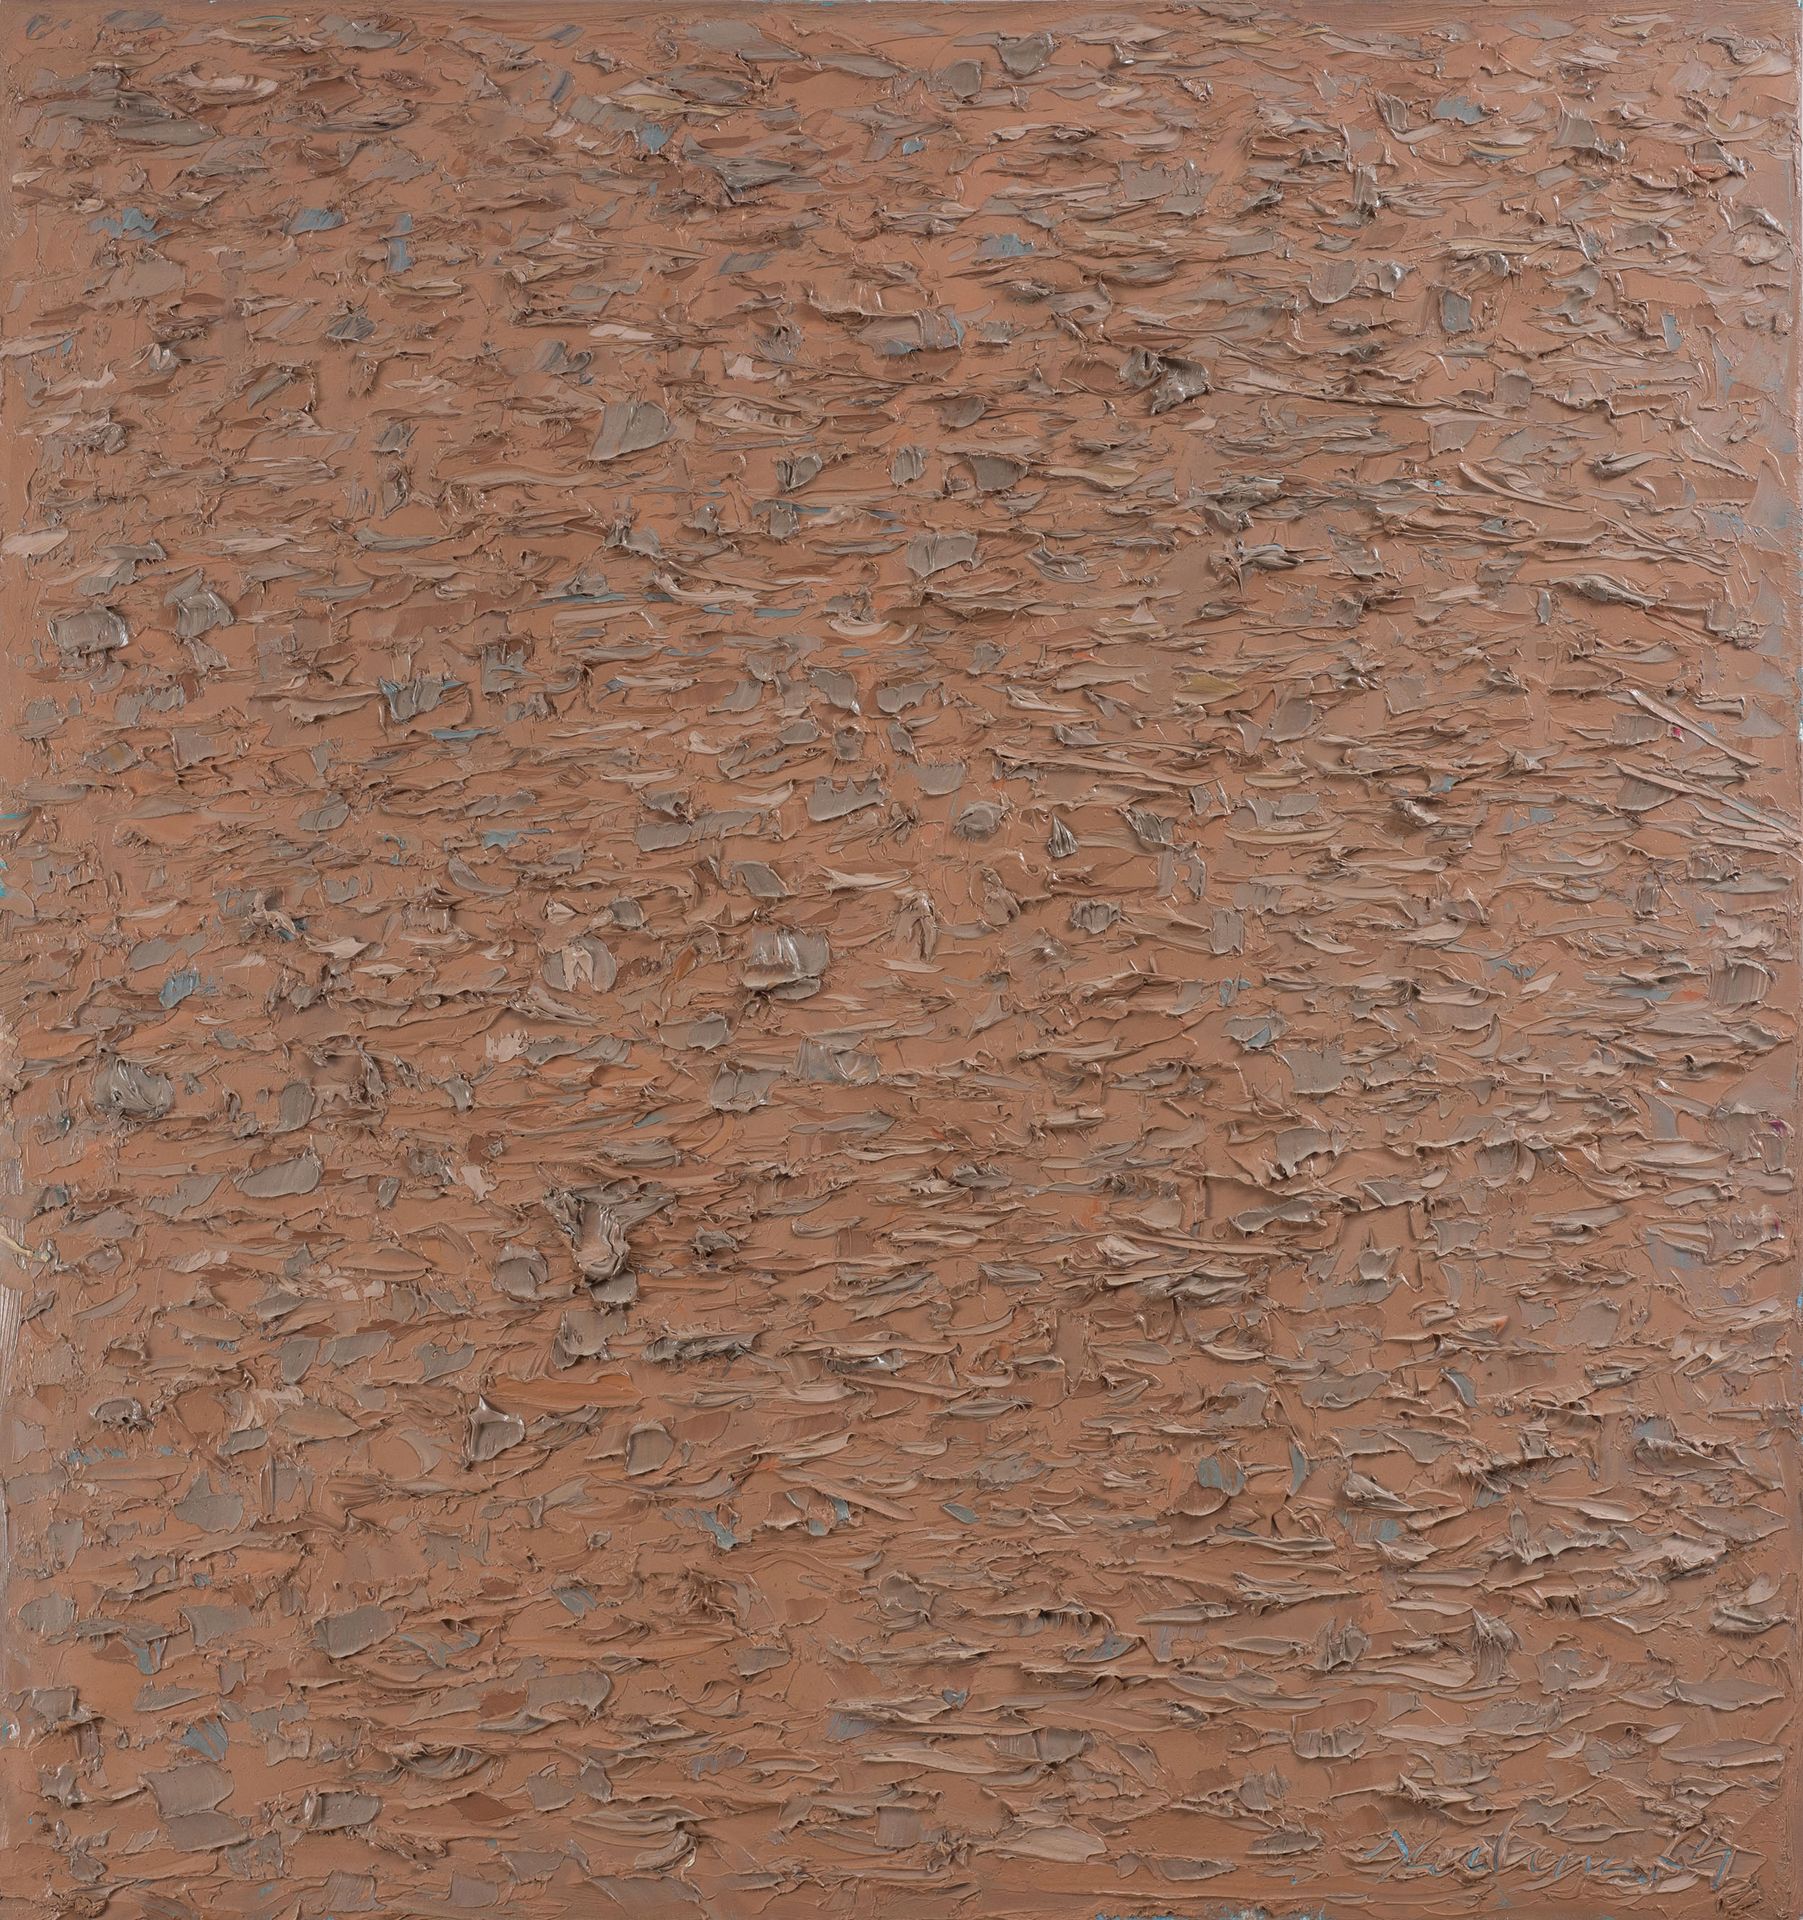 PIERO SADUN Siena 1919 ; 1974
VI no.31, 1974
Mixed media on canvas, 80 x 75 cm
S&hellip;